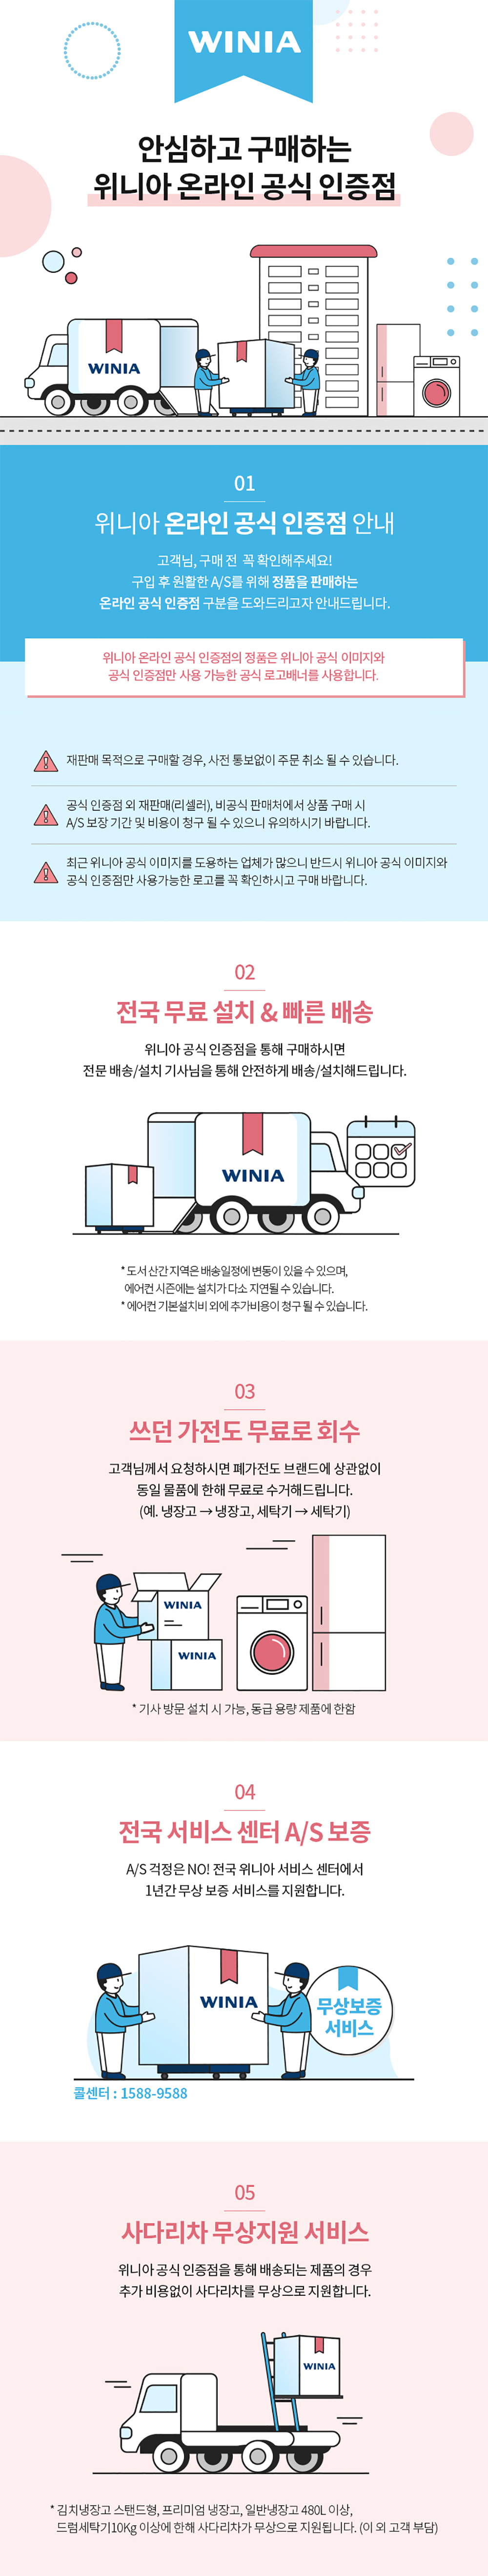 winia-service1.jpg